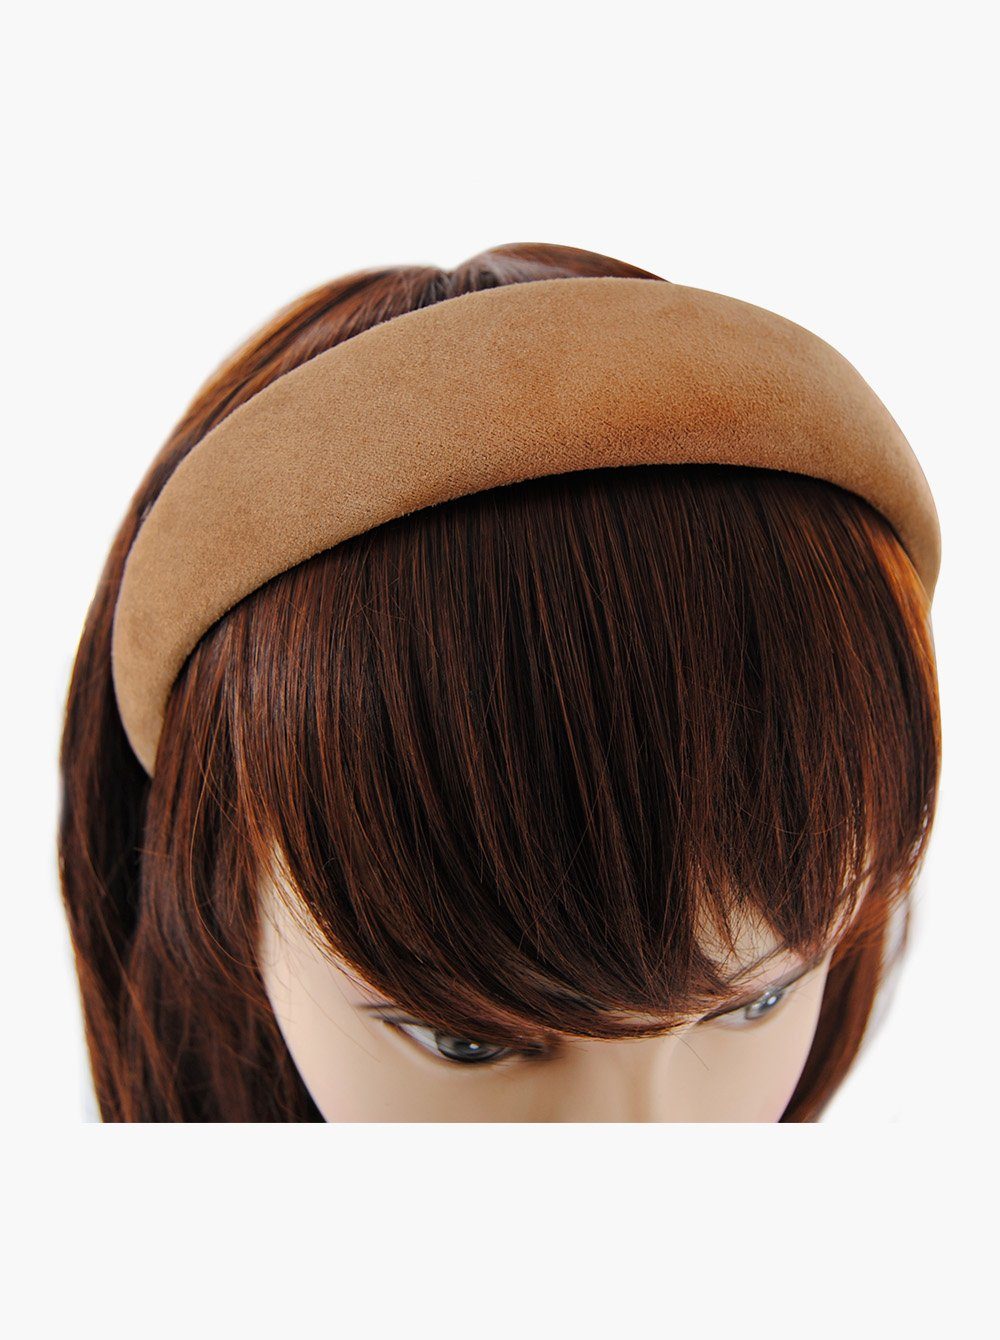 Optik) Damen Haarreif Flanell Haarband axy Vintage Haarreif mit HRK5L, und Beigebraun (Leder Klassik-Look Breiter Haareifen